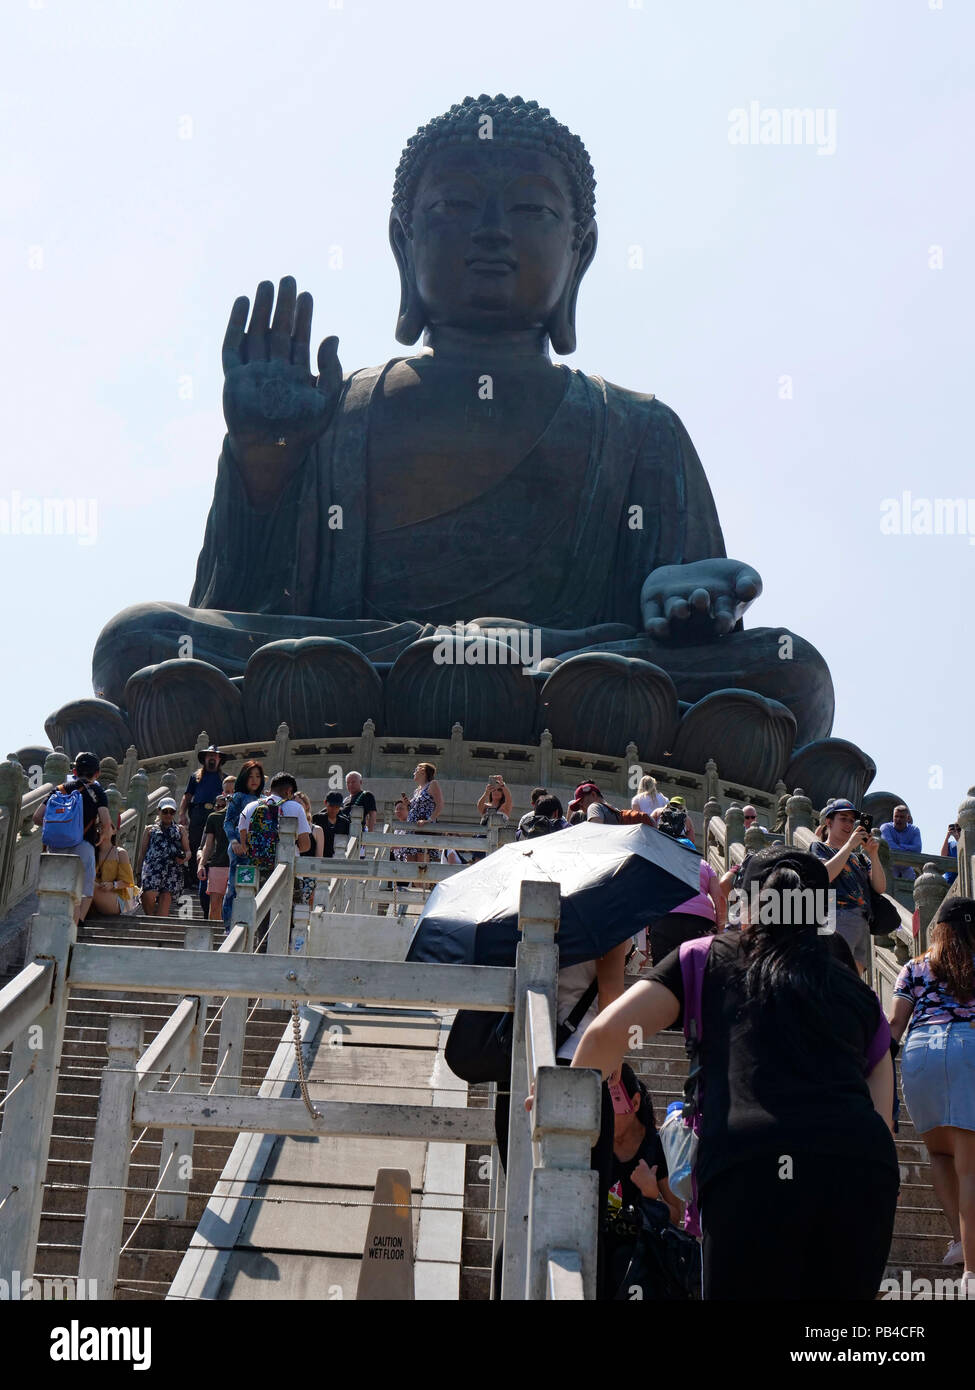 Bronze statues at Tian Tan Buddha, (Big Buddha) near the Buddhist Po Lin Monastery, Ngong Ping, Lantau Island, Hong Kong Stock Photo